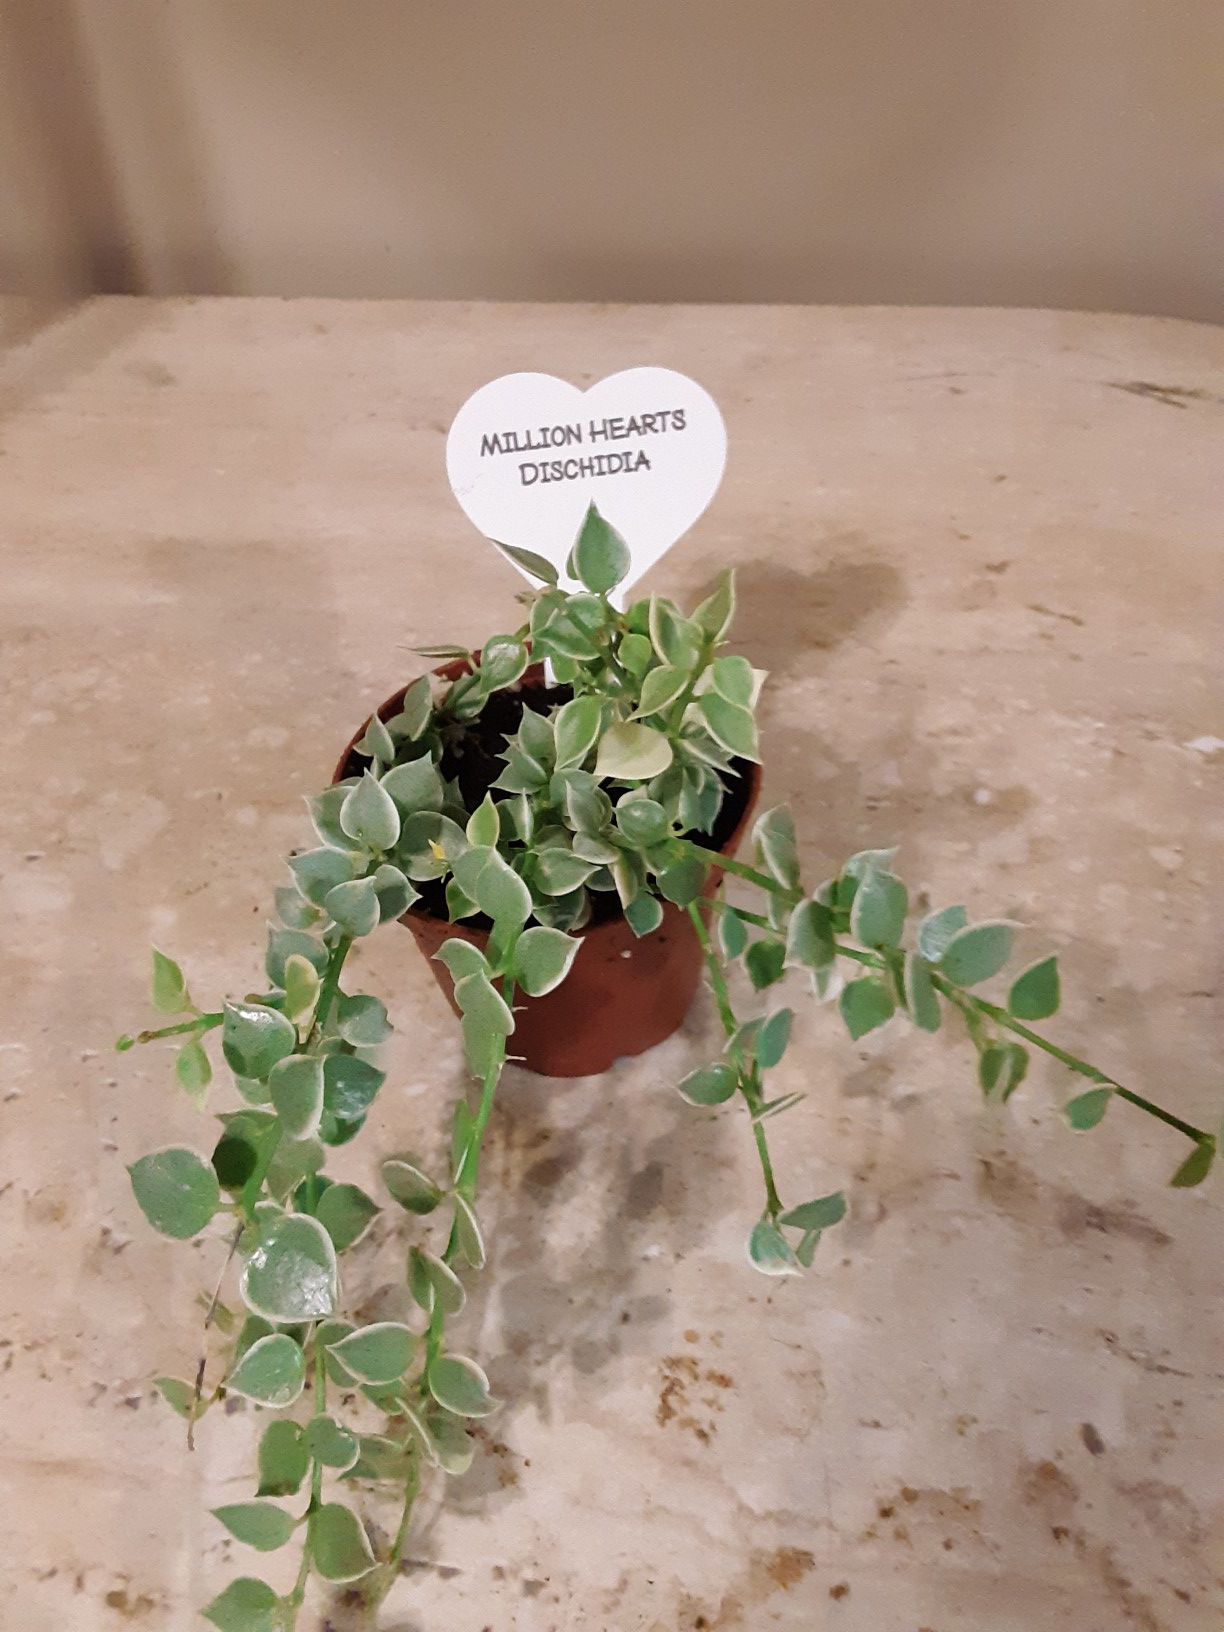 Million hearts plants 2.5 inches pot